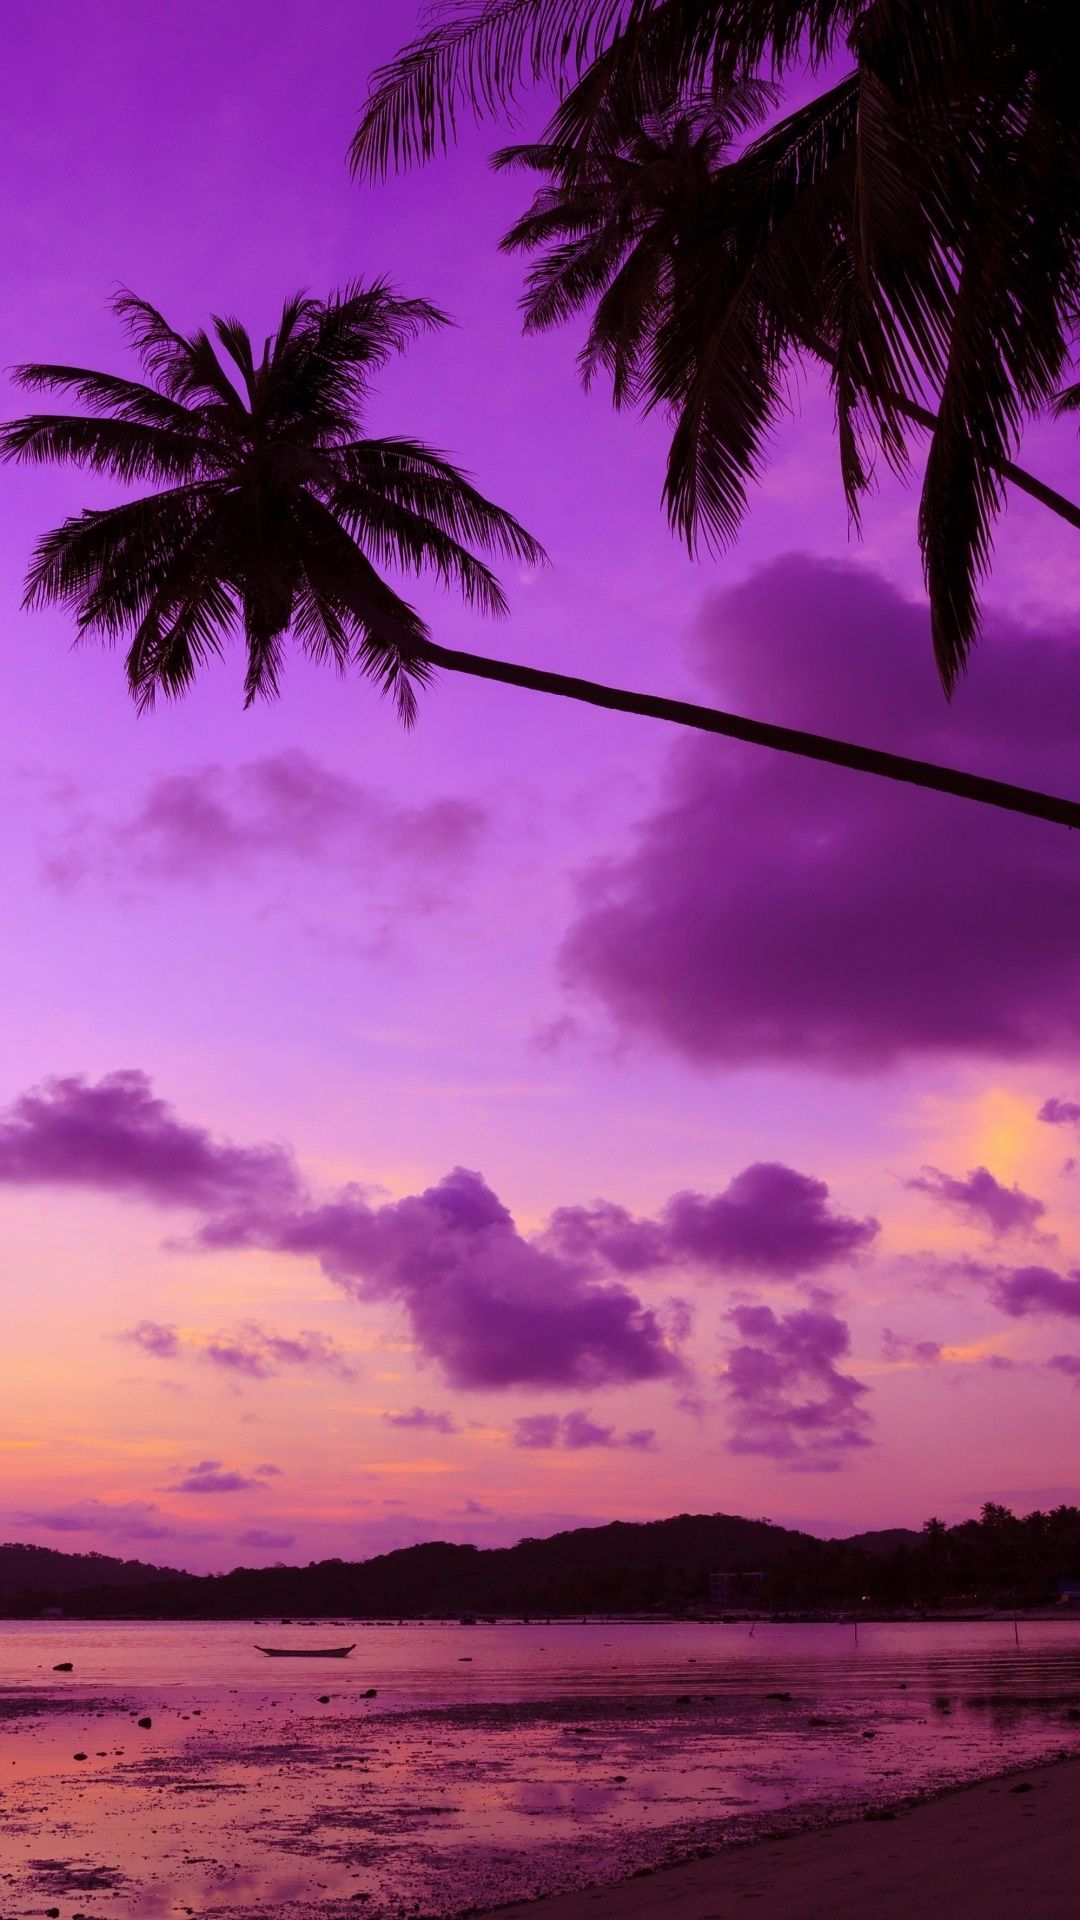 Wallpaper / Photography Sunset Phone Wallpaper, Nature, Beach, Cloud, Palm Tree, Purple, 1080x1920 free download